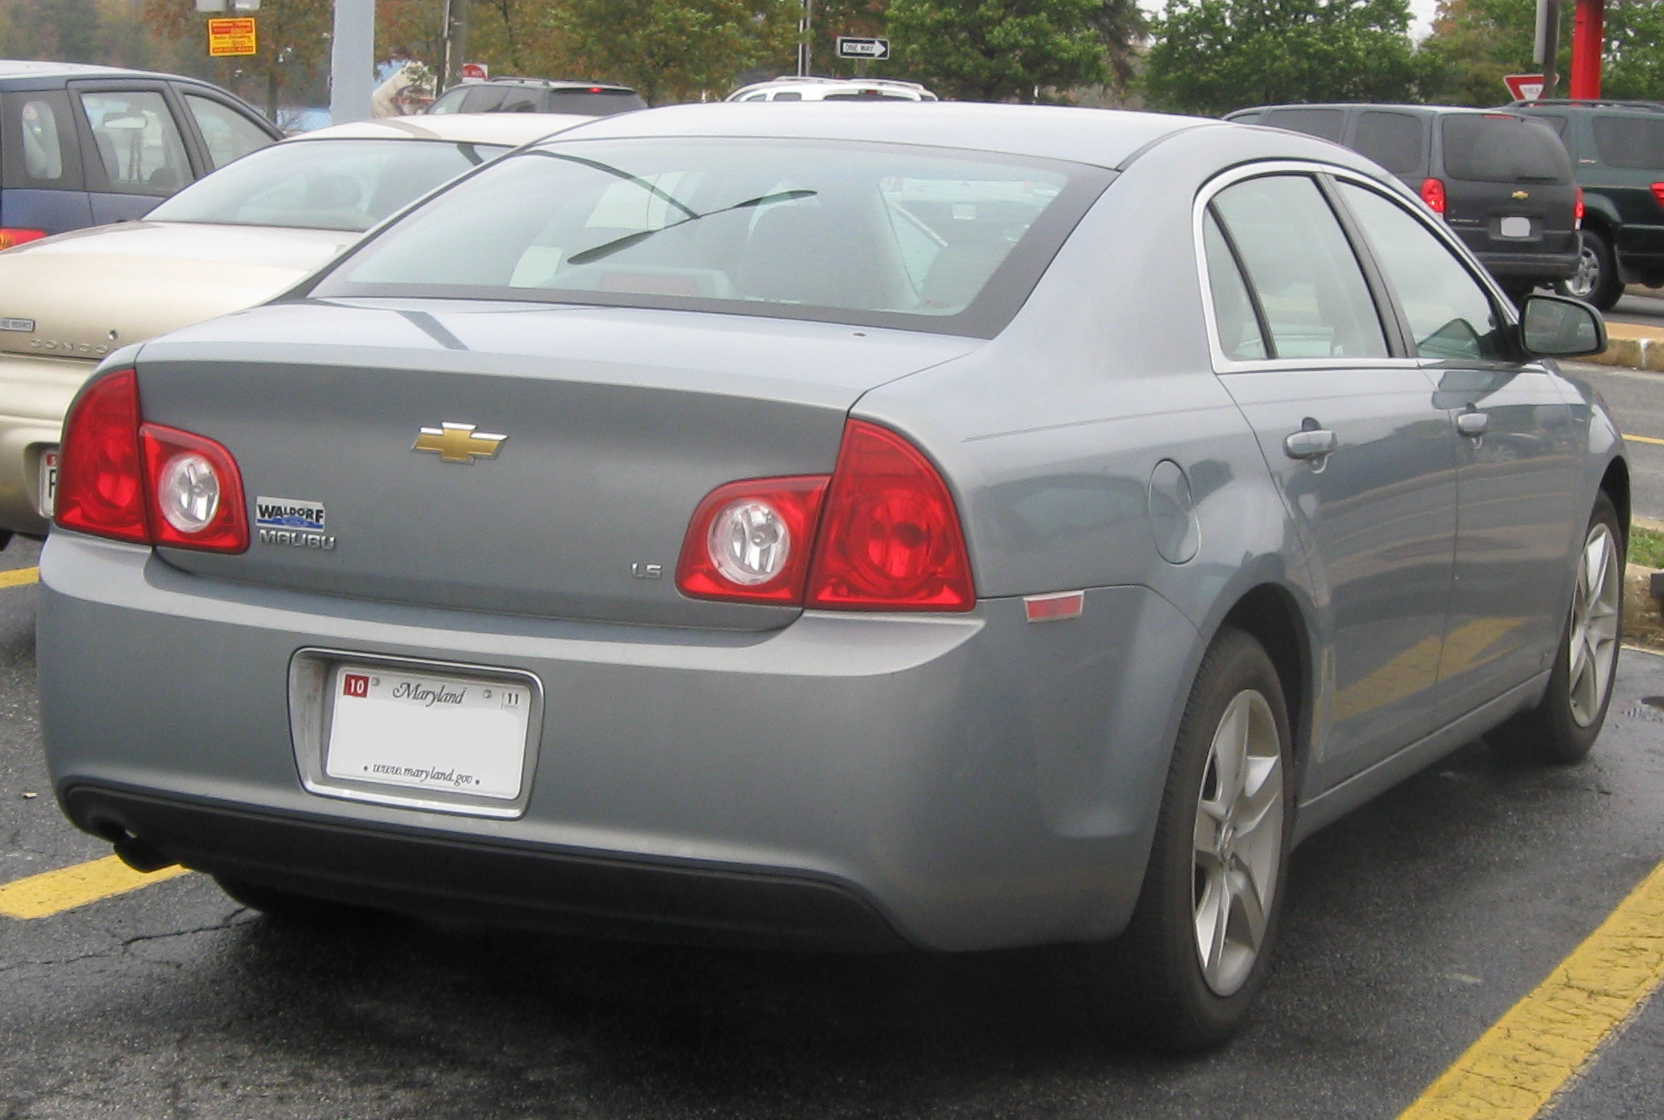 File:Chevrolet Malibu LS rear -- 10-31-2009.jpg - Wikipedia